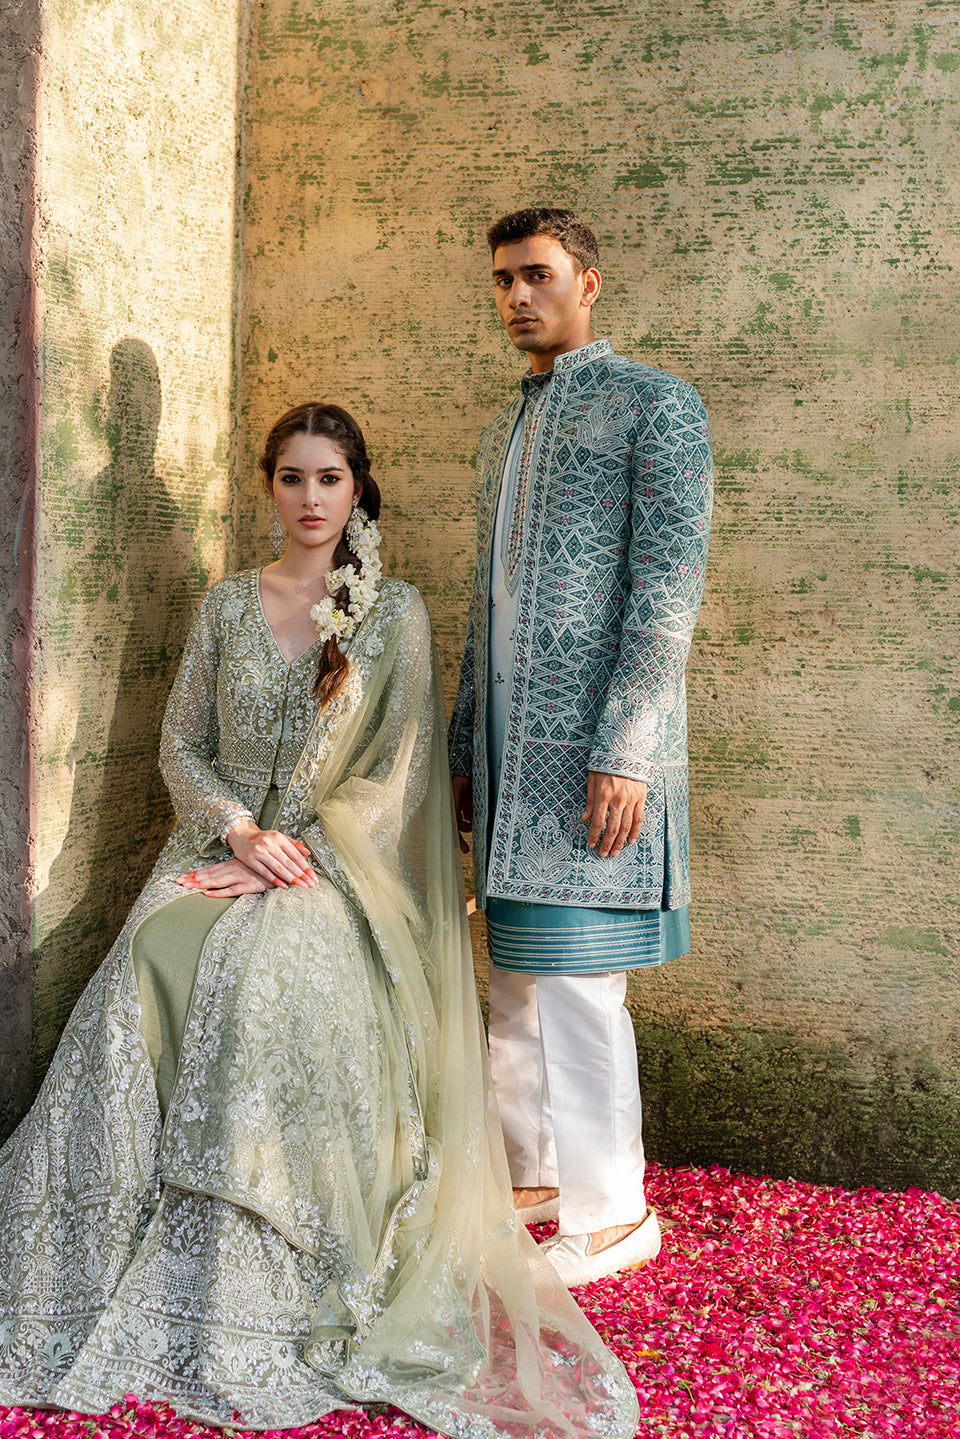 Telugu bride and groom | Wedding dresses men indian, Wedding dress men,  Couple wedding dress